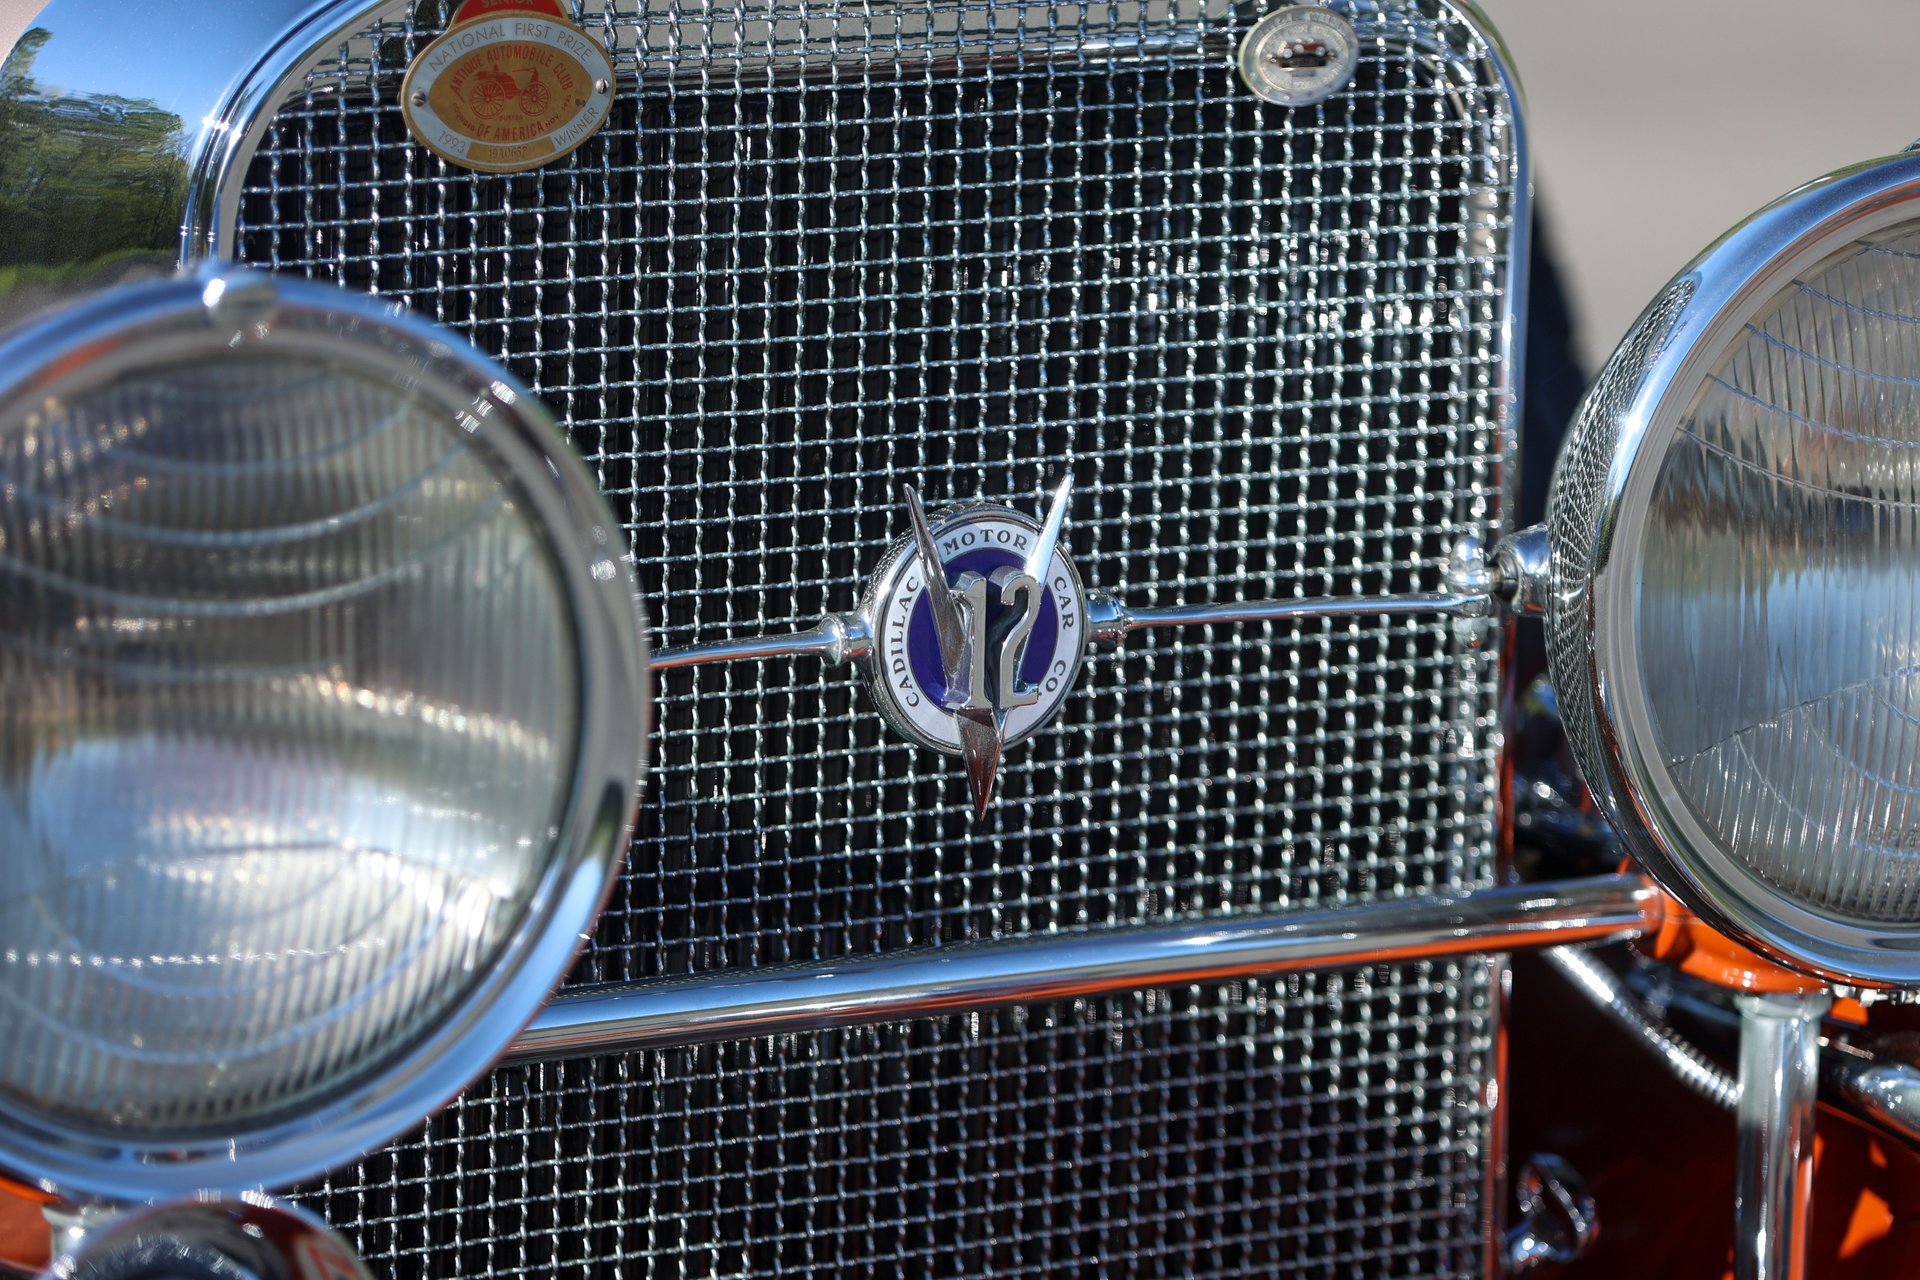 For Sale 1931 Cadillac Model 370A V-12 Sport Phaeton